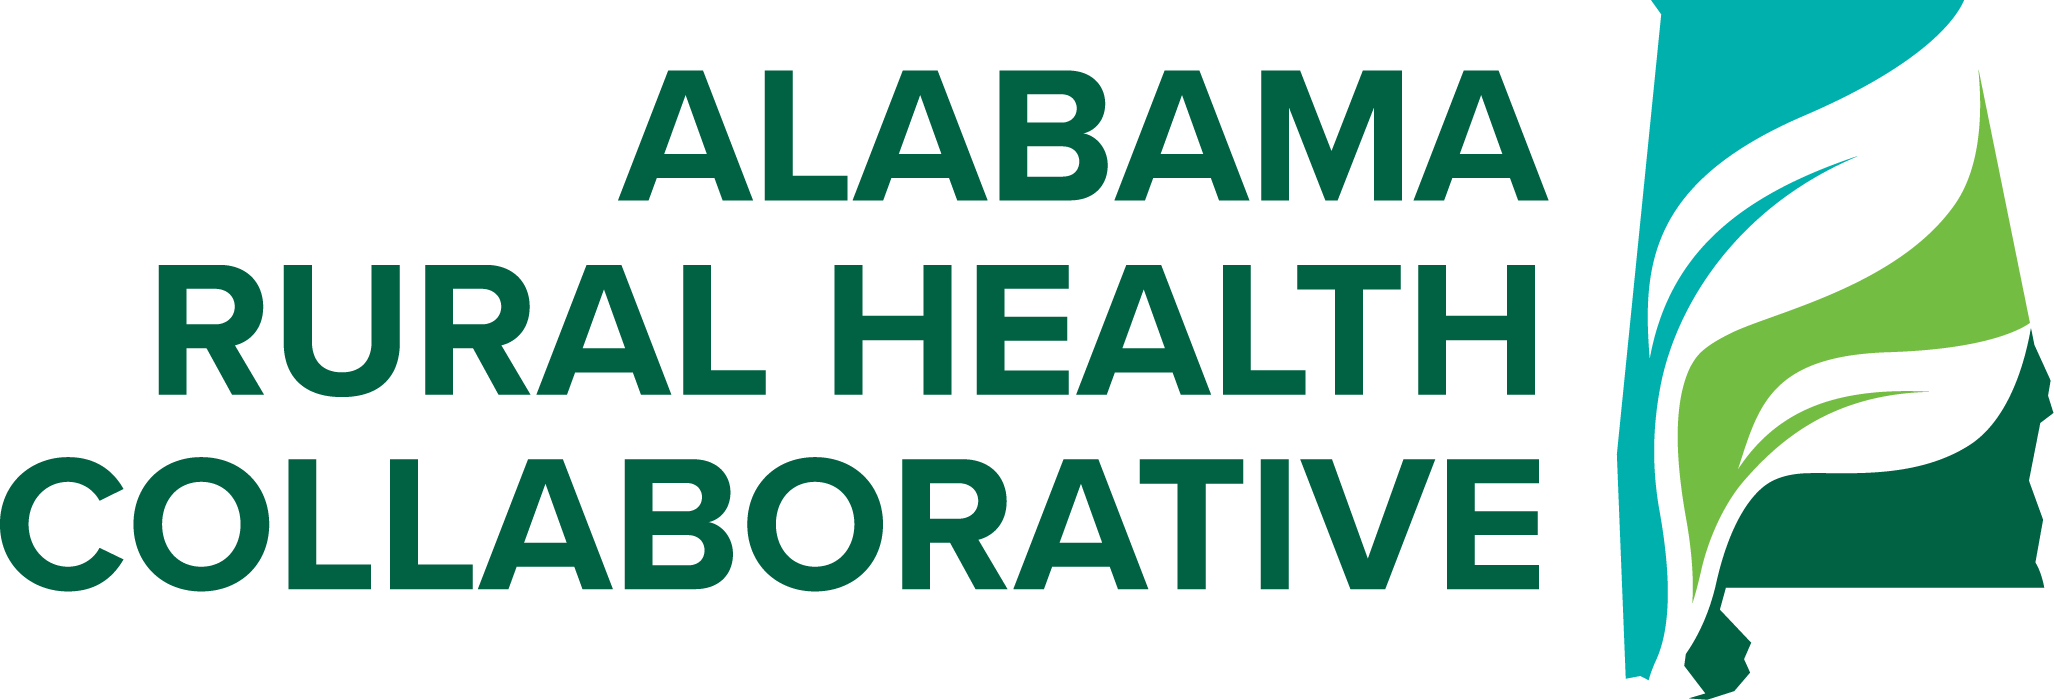 Alabama Rural Health Collaborative (ARHC) logo